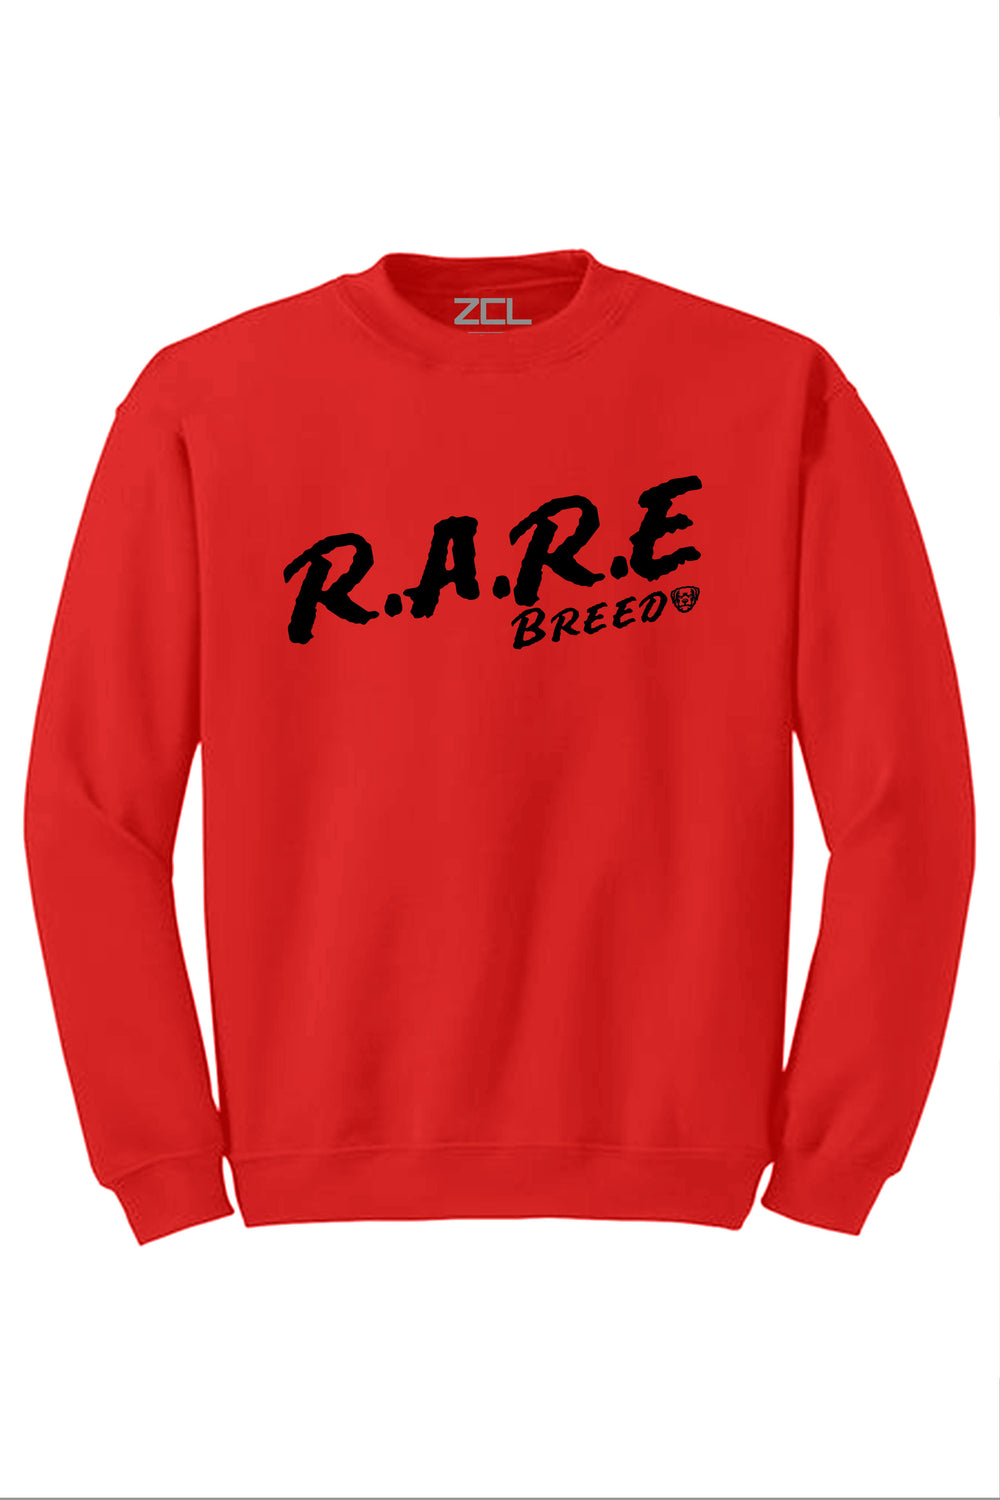 Rare Breed Crewneck Sweatshirt (Black Logo) - Zamage